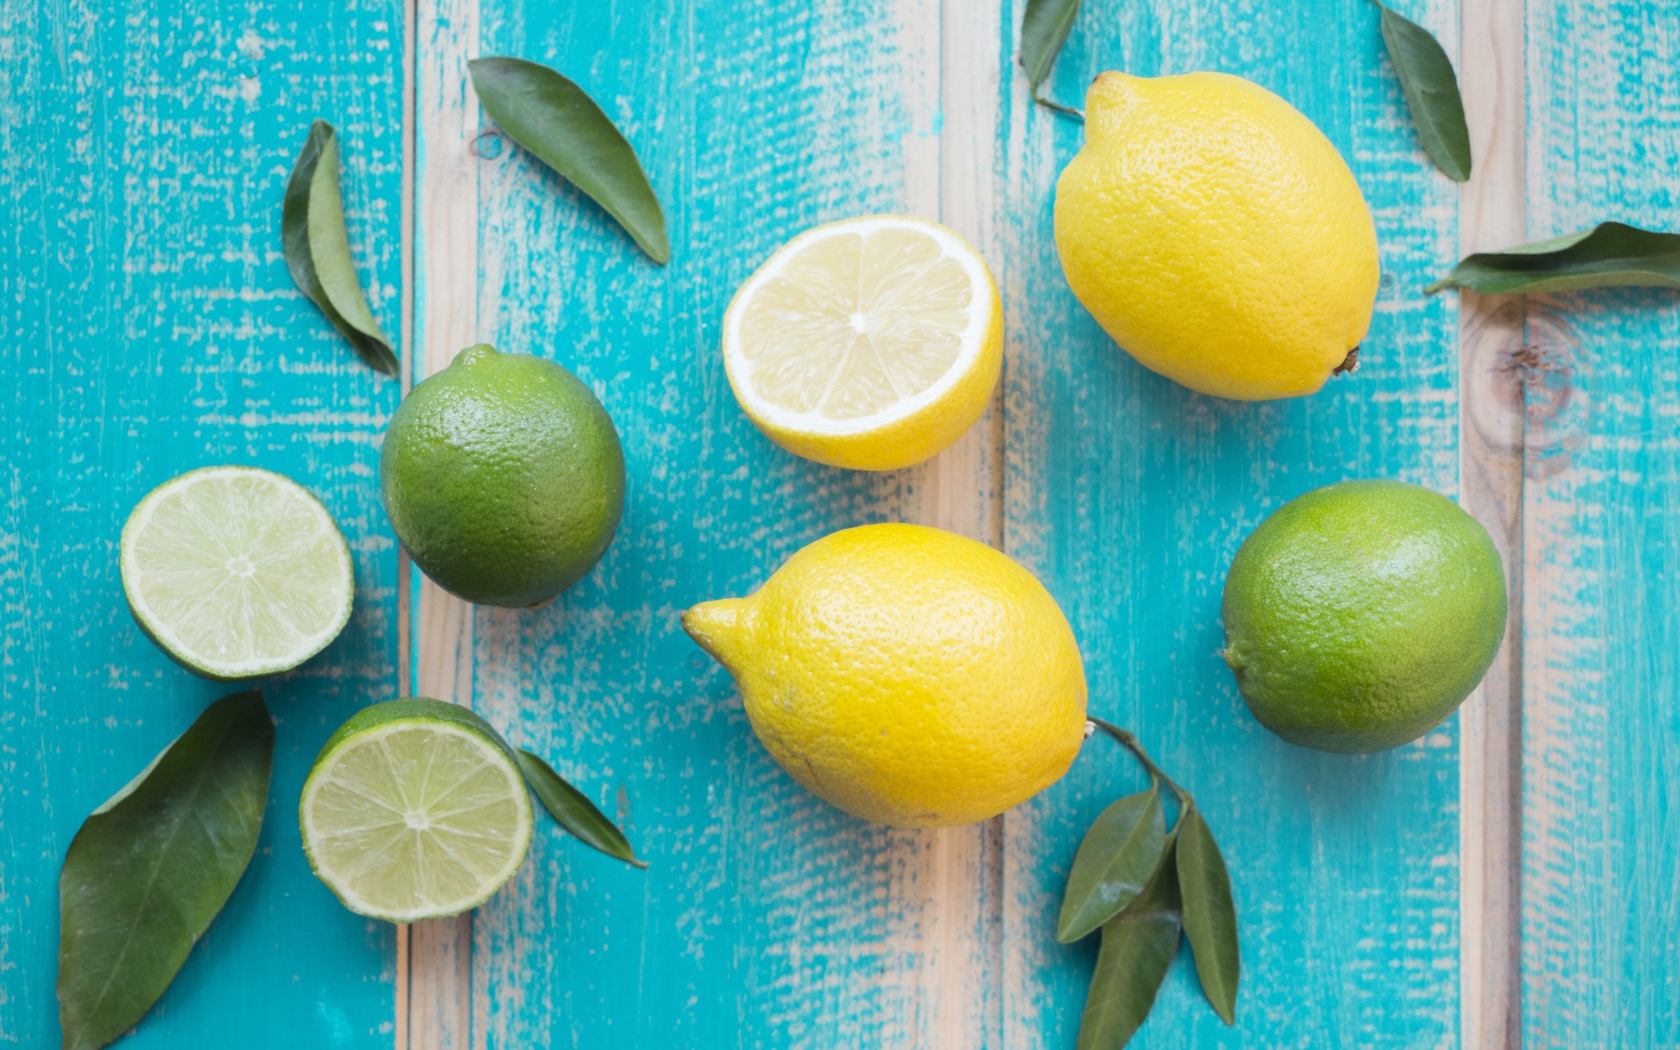 Yellow lemons and green lime fruits on the table